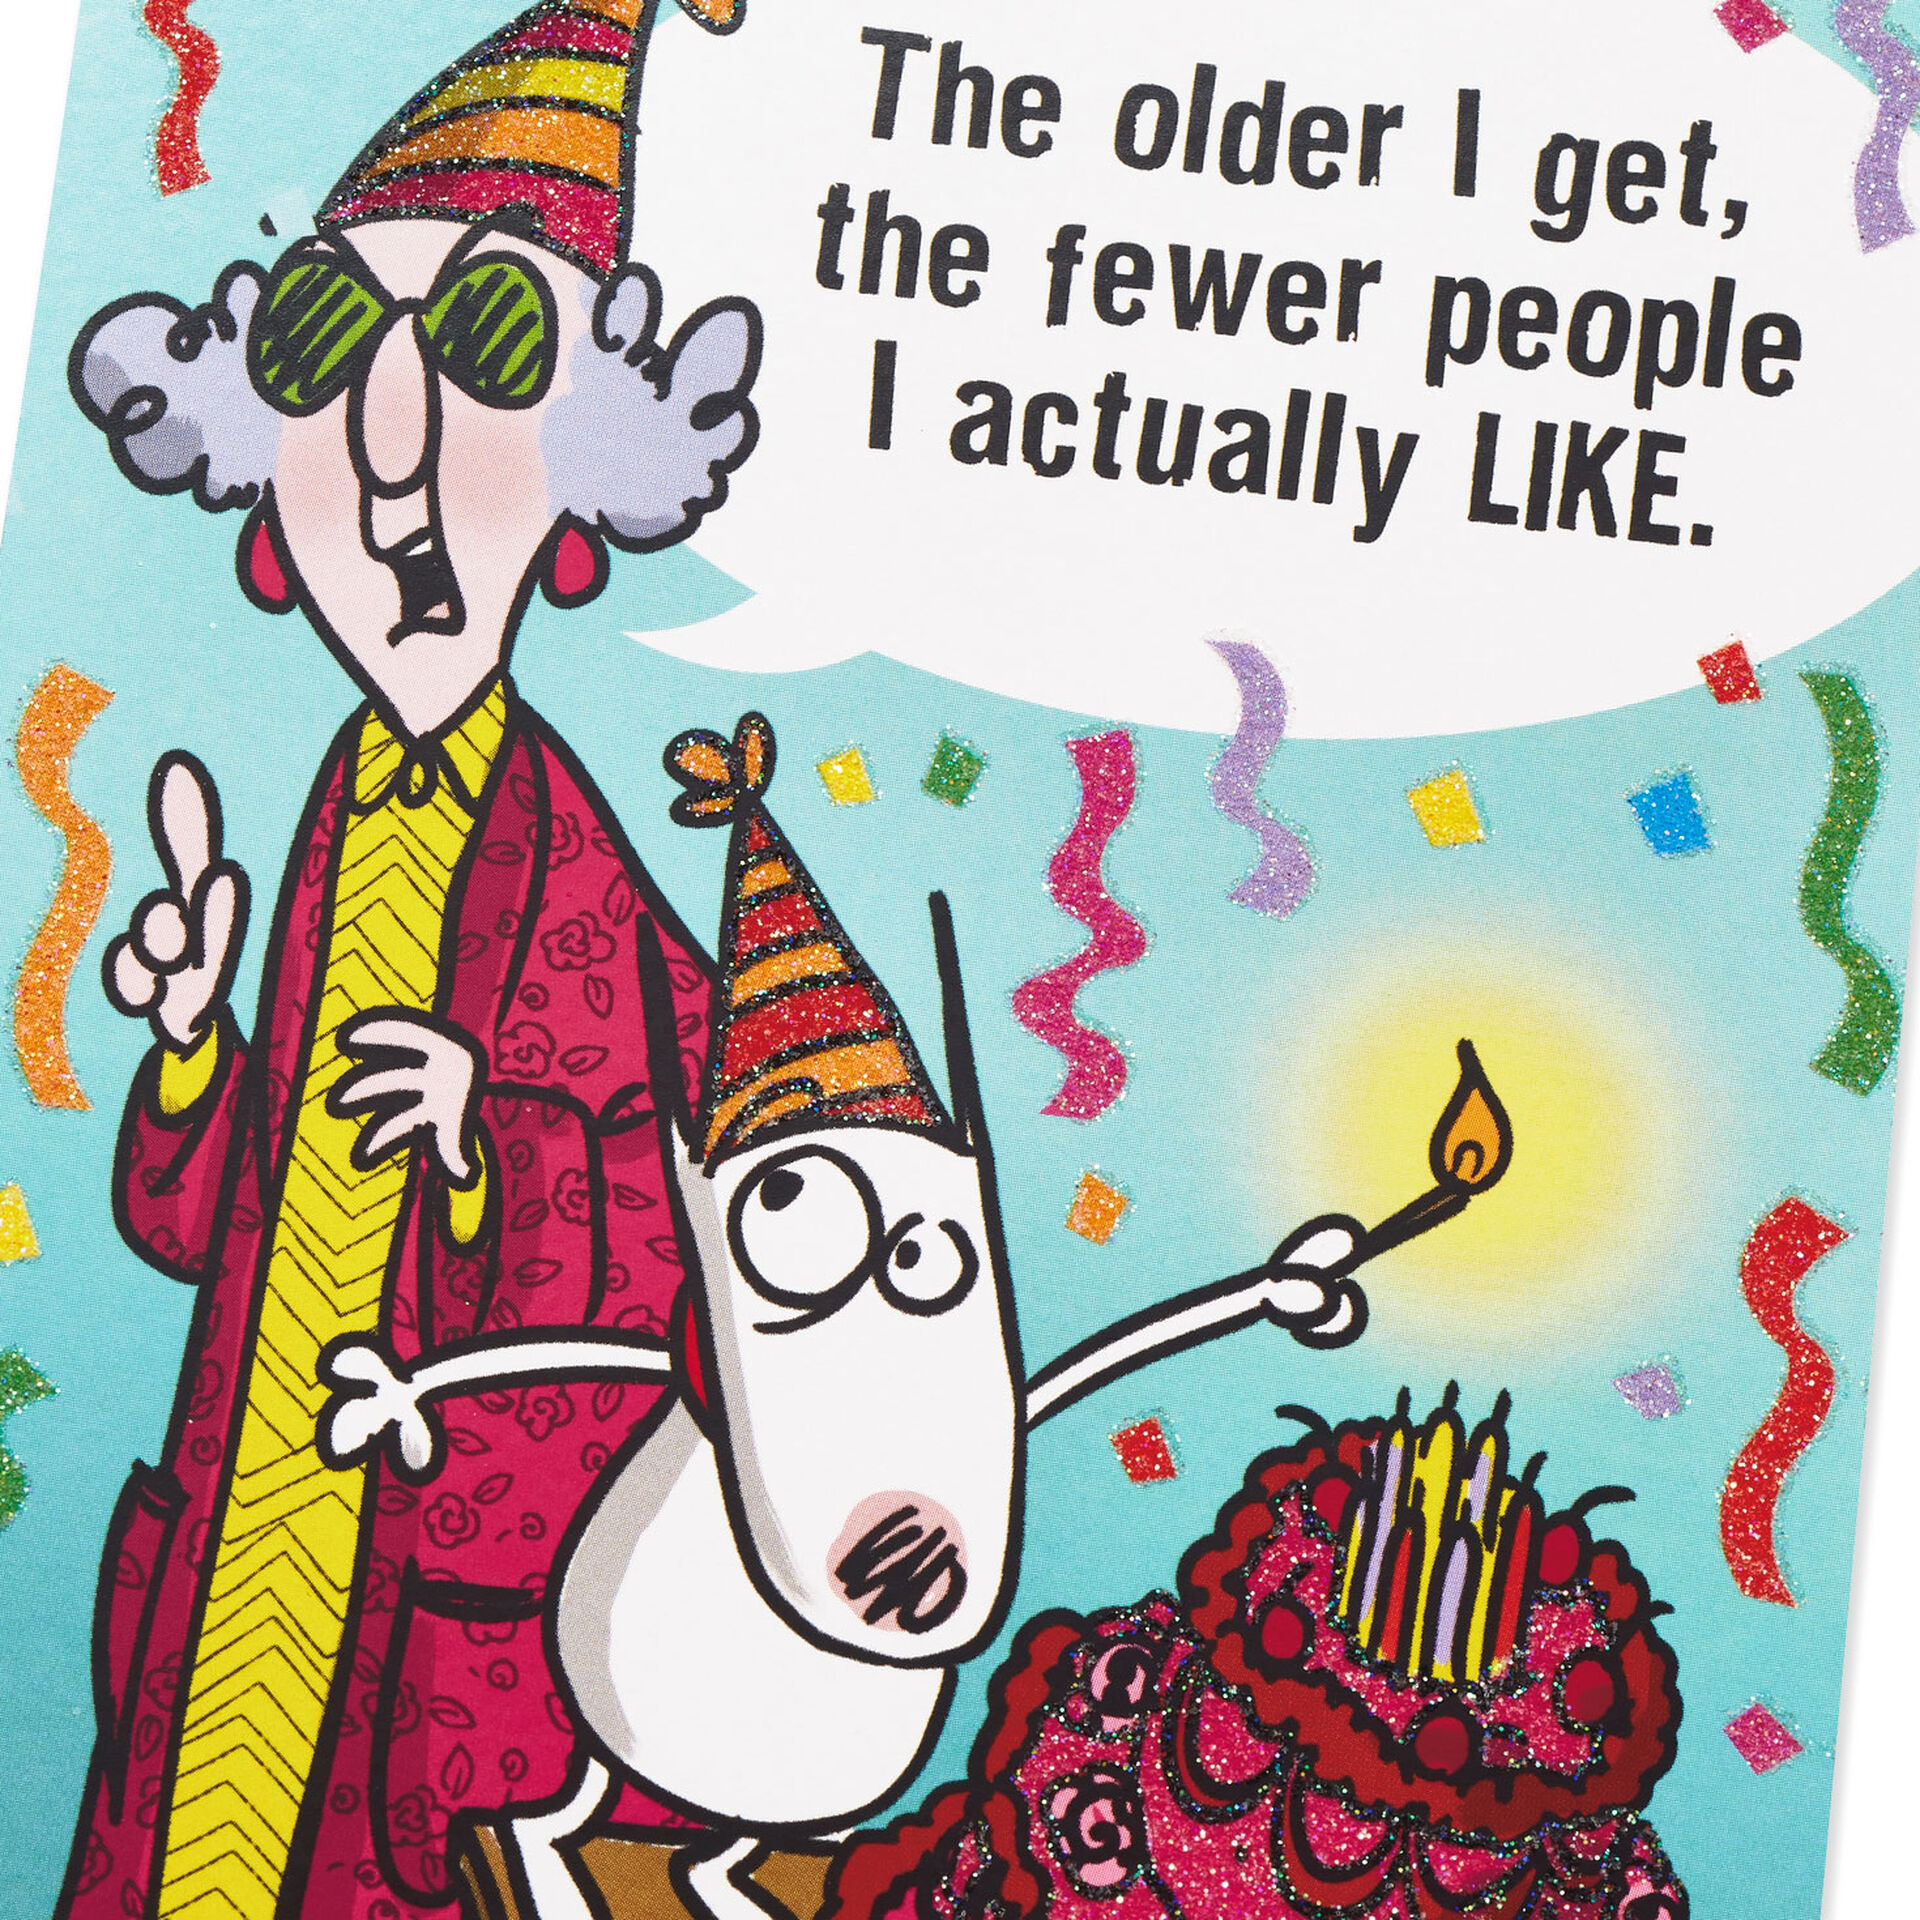 You Make the Cut Funny Birthday Card - Greeting Cards - Hallmark